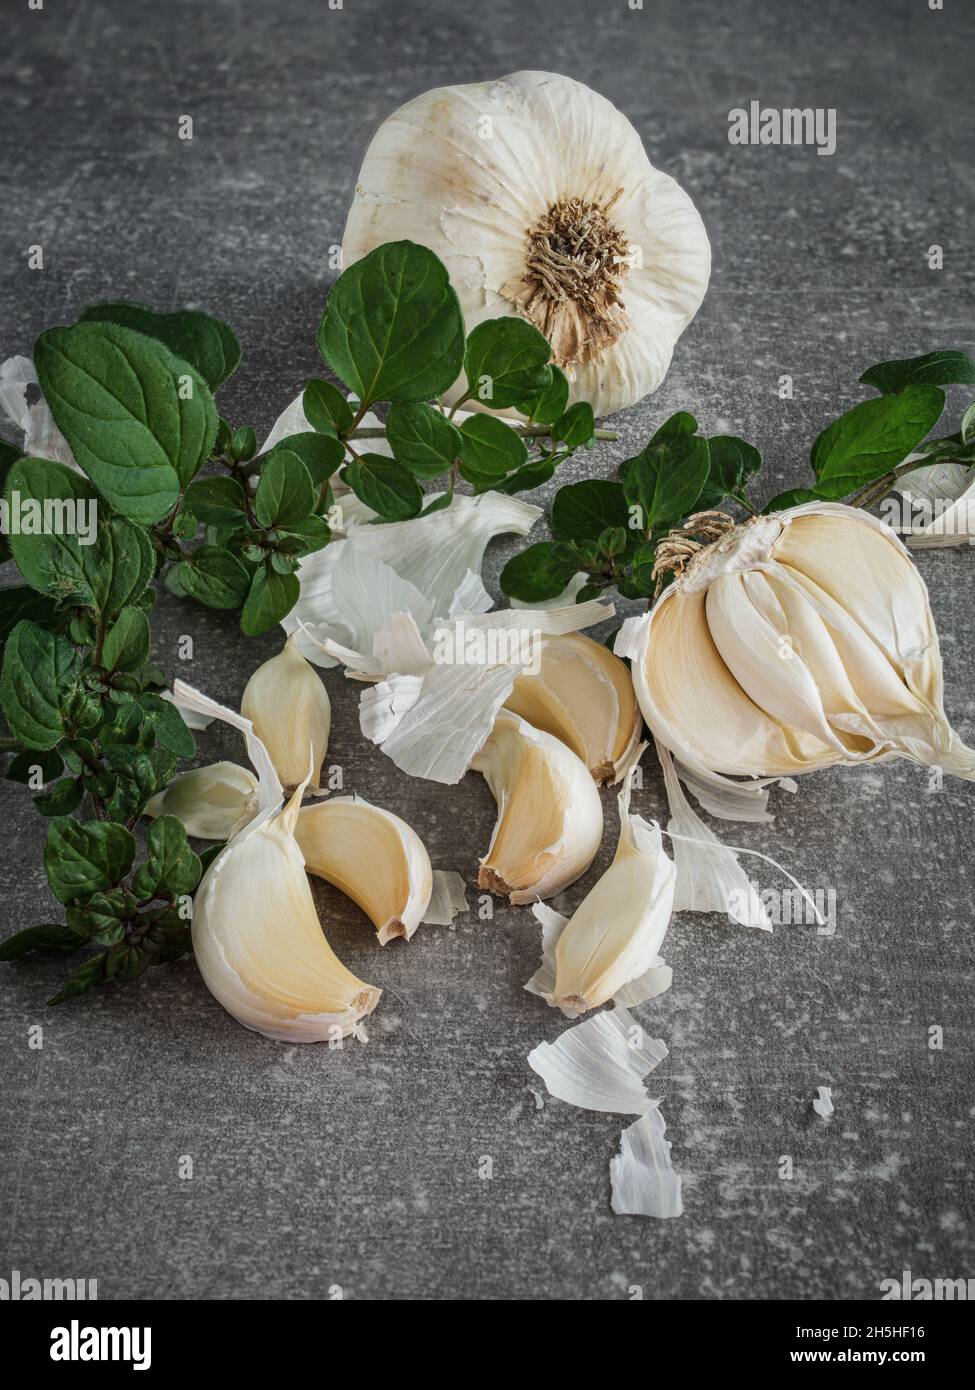 Bulbs of garlic (allium) and leaves o fresh oregano on dark background. Copy space. Stock Photo